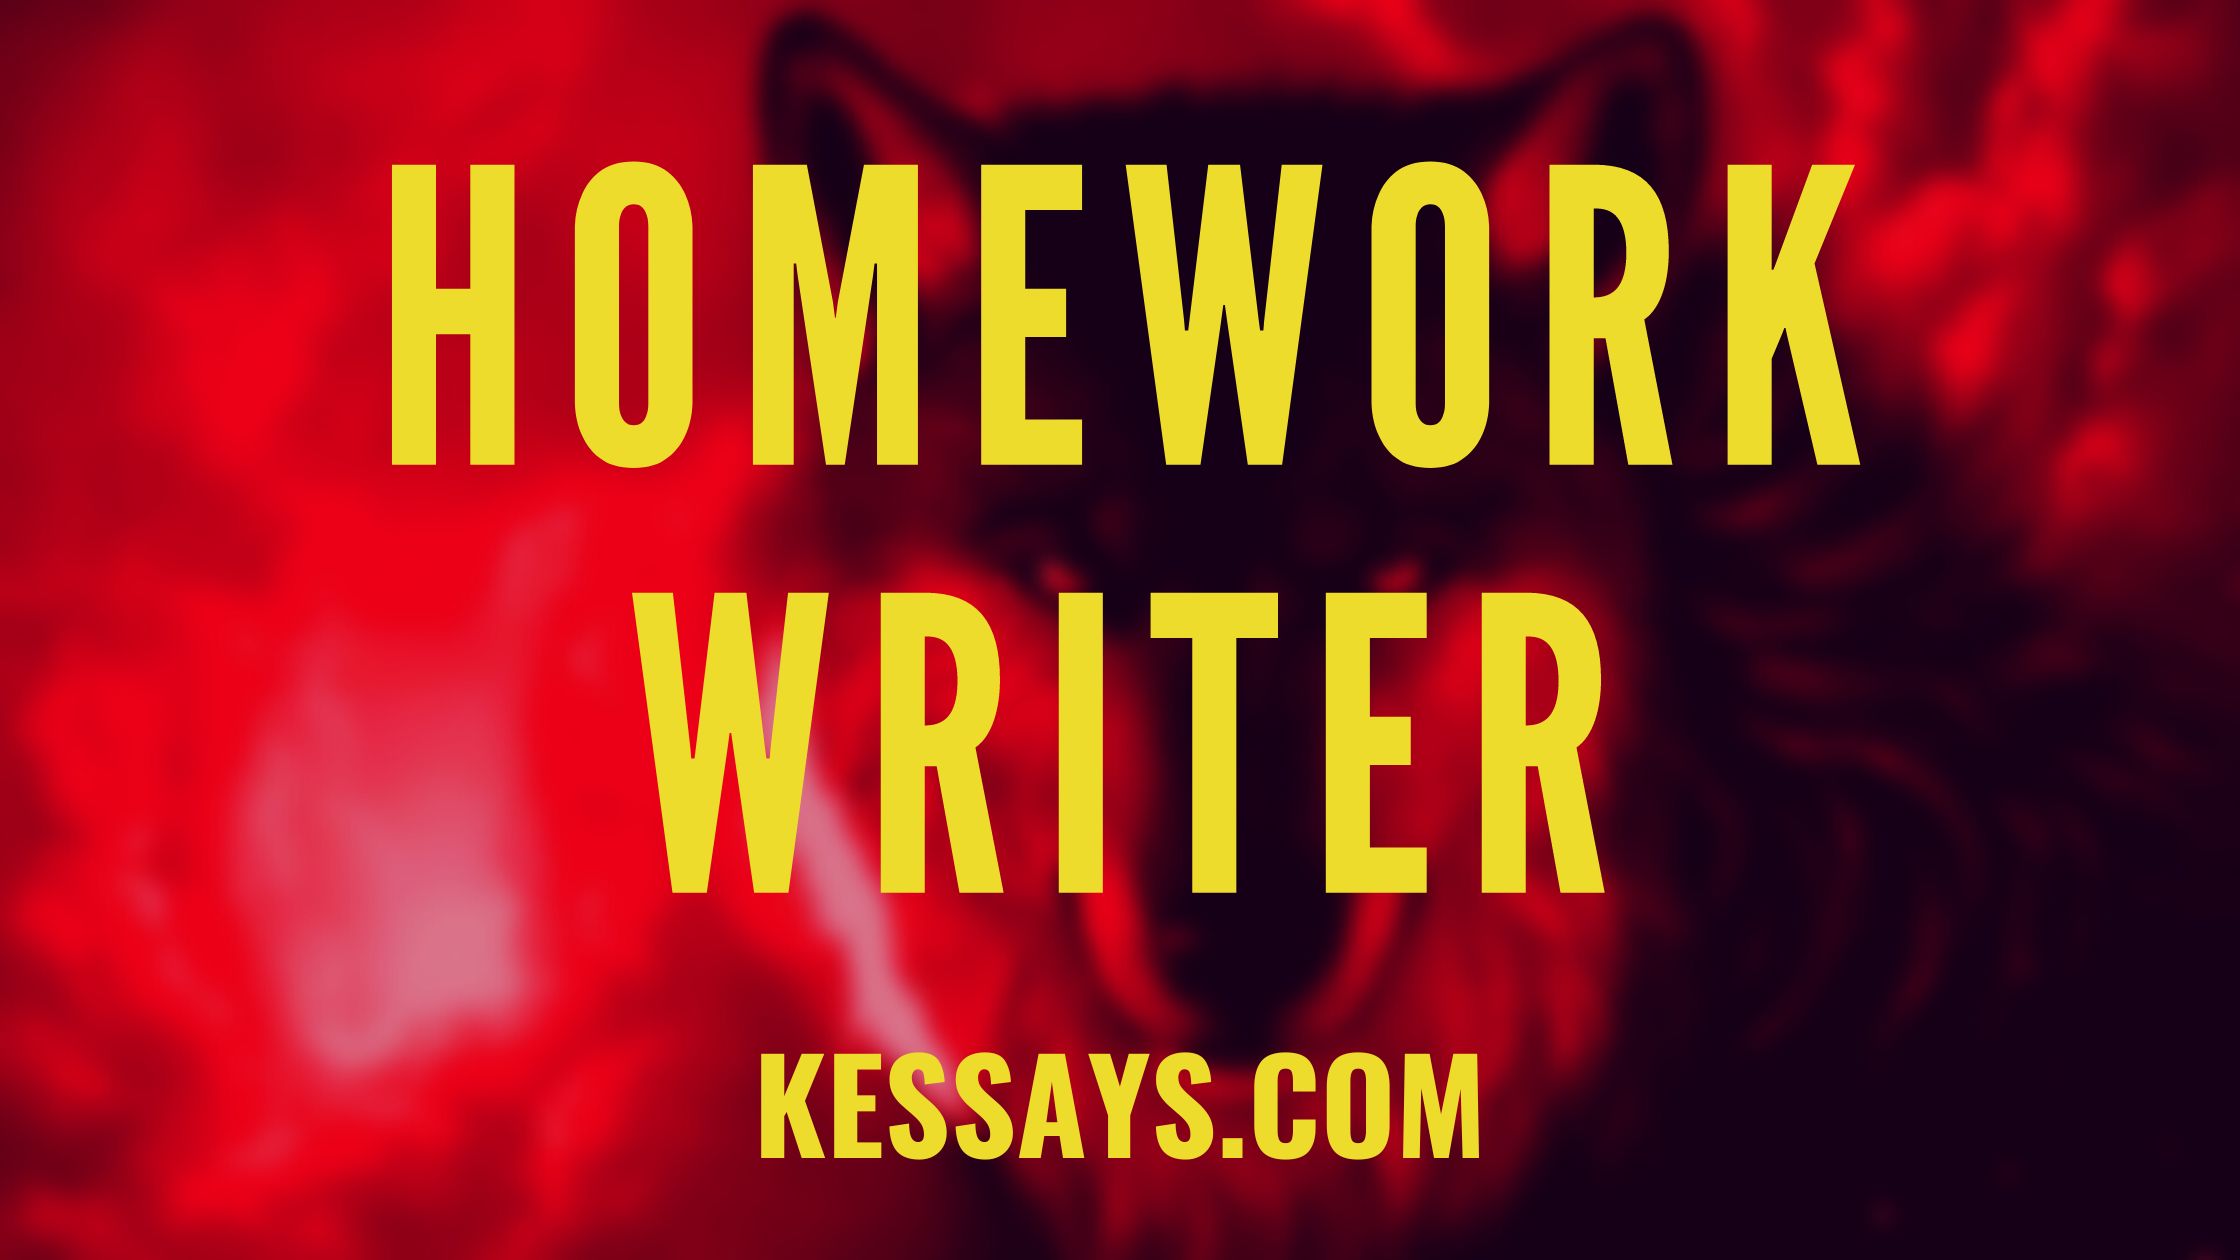 write my homework